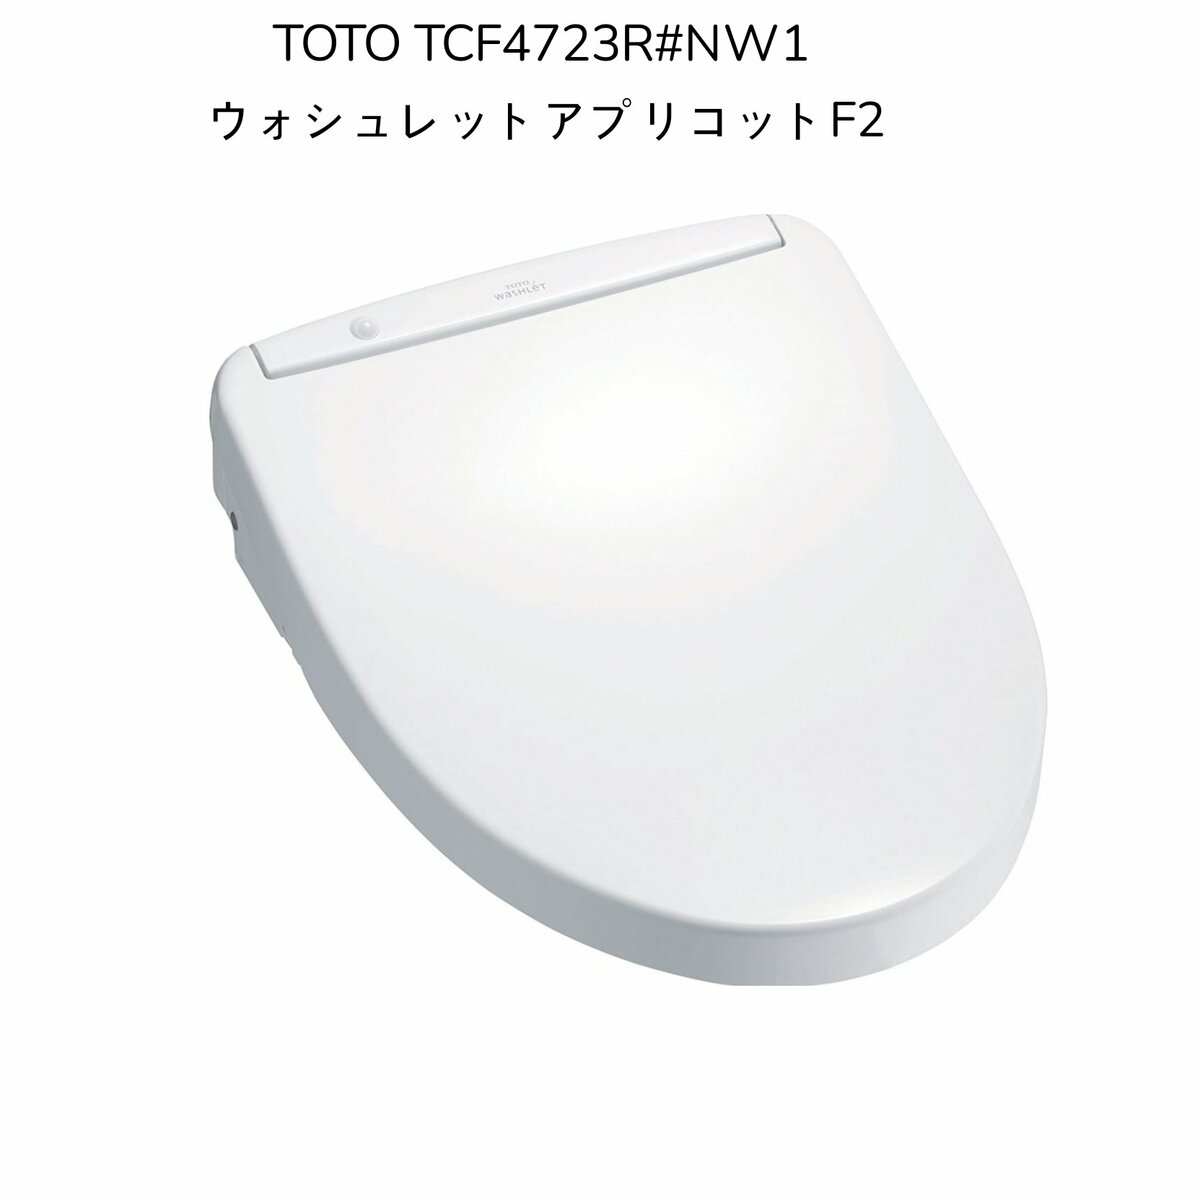 TOTO アプリコット F3AW TCF4833AKS #NW1 温水洗浄便座 ホワイト